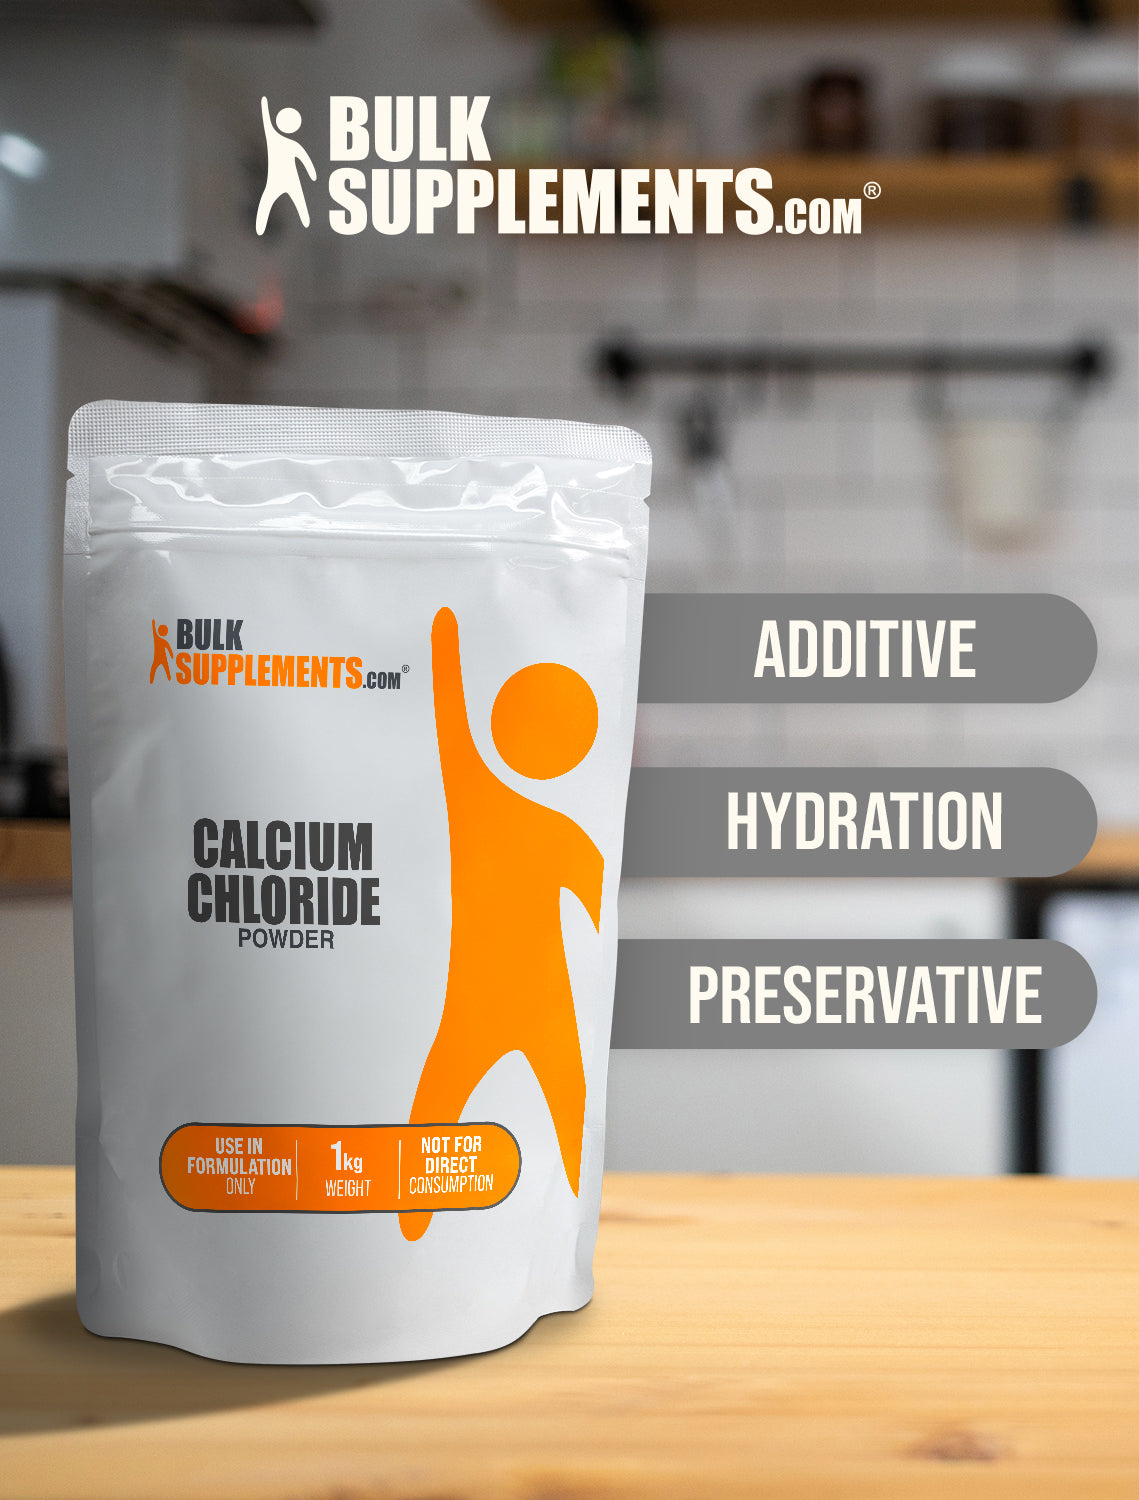 Calcium chloride powder keyword image 1kg